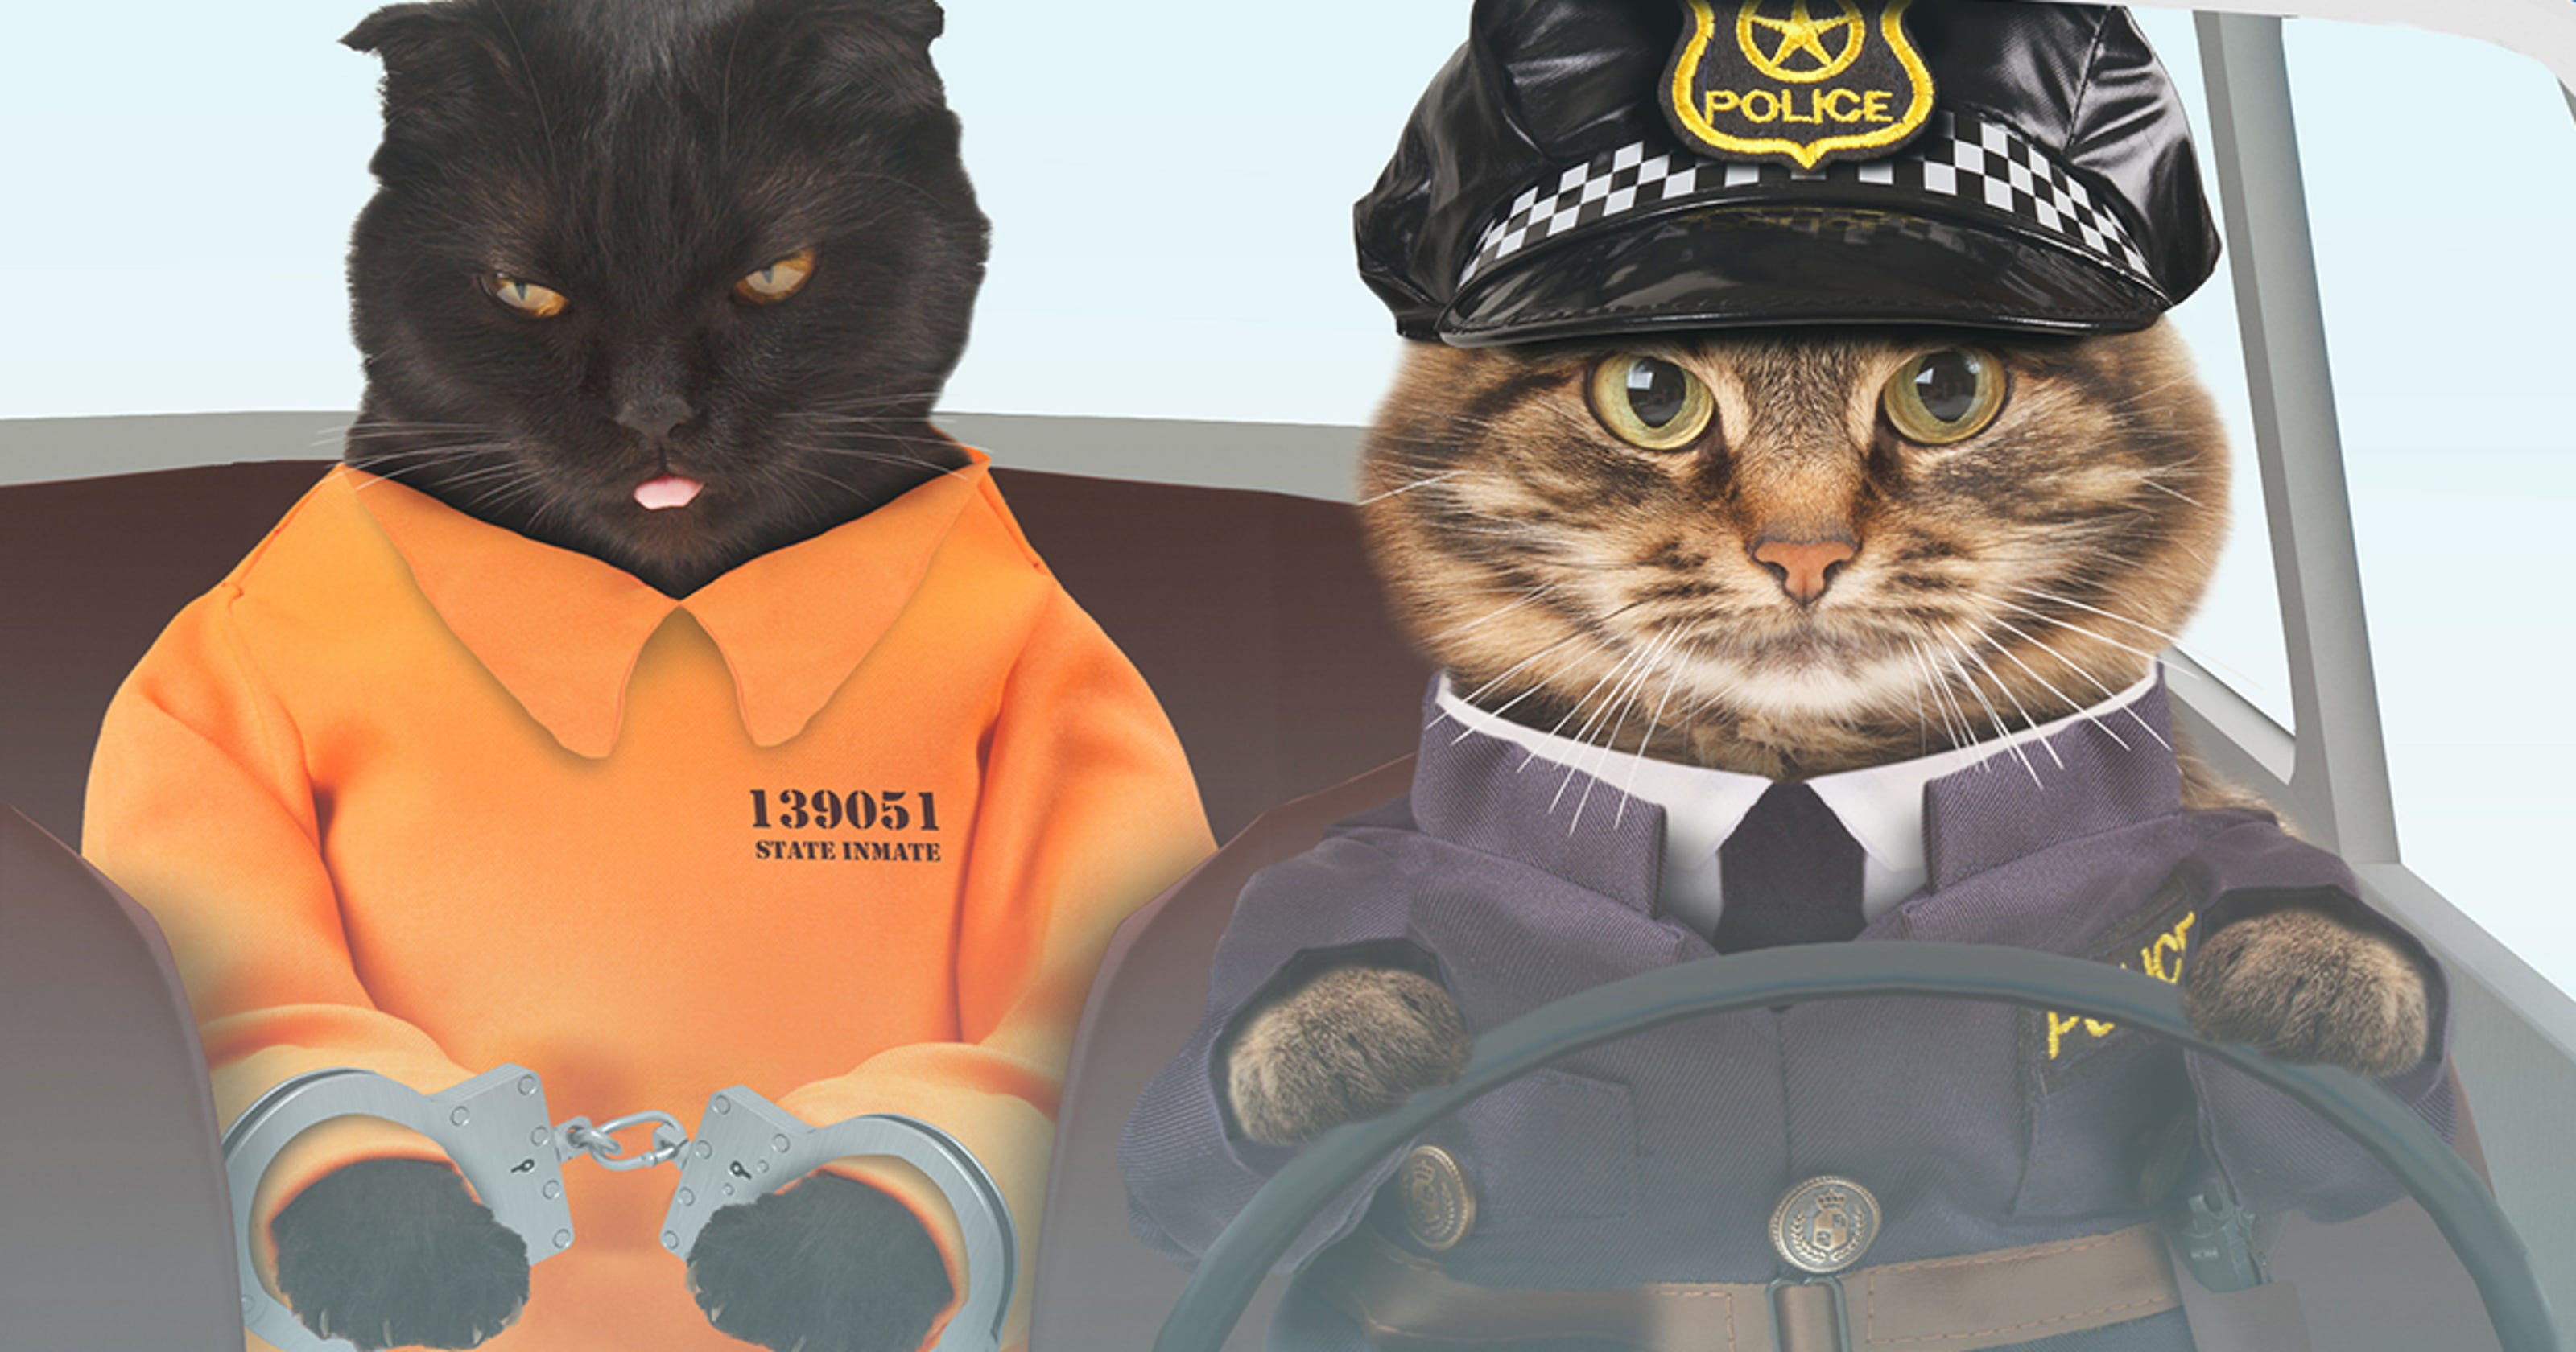 Police Cat On Way After Michigan Department Exceeds Twitter Challenge